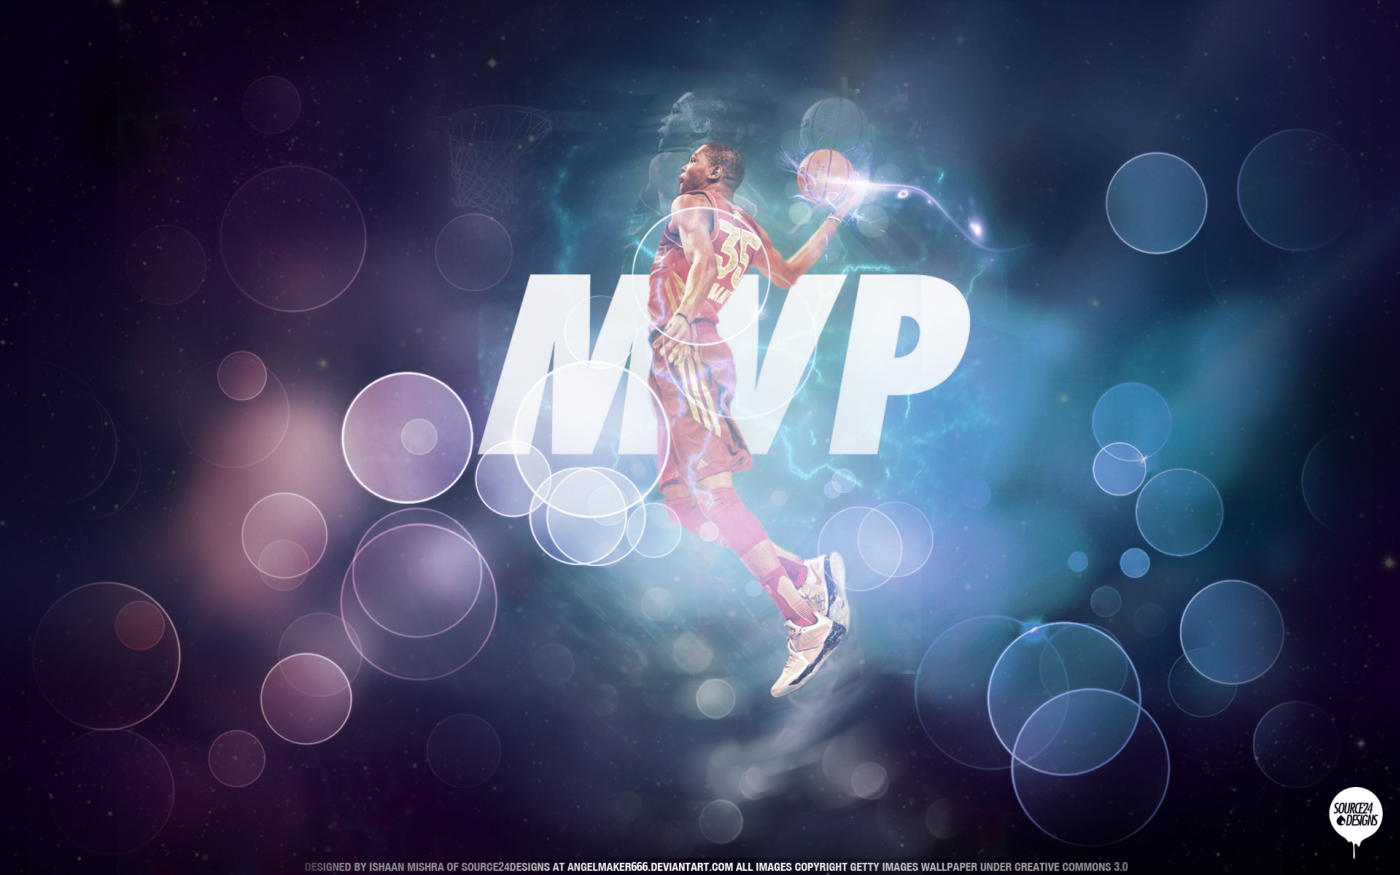 Kevin Durant NBA All Star 2012 Wallpaper HD - Streetball